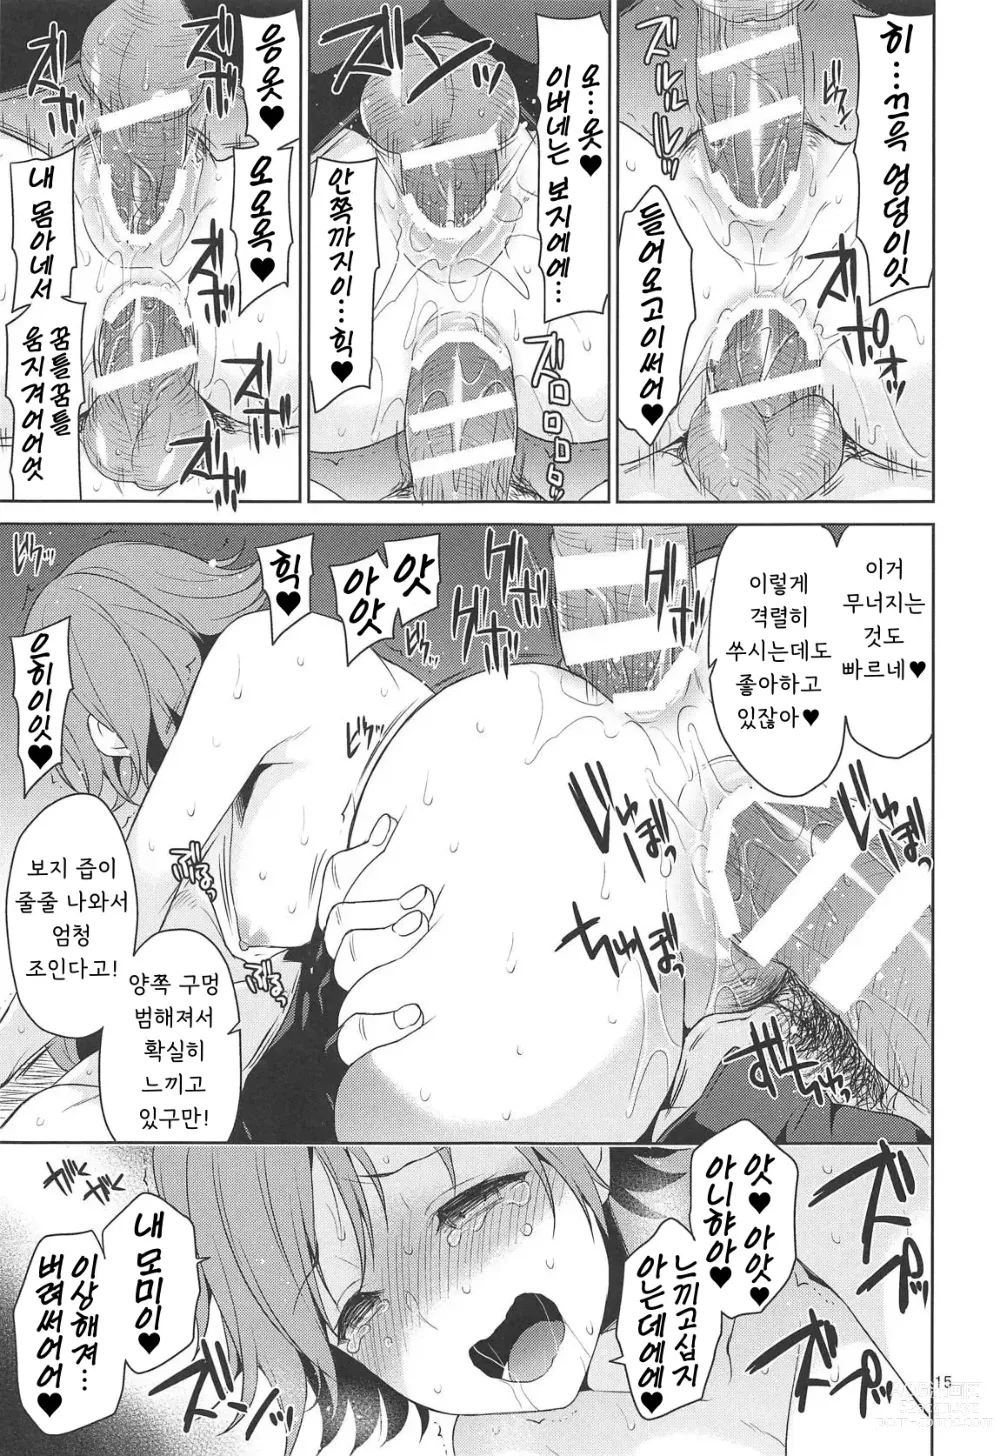 Page 12 of doujinshi 이세계 능욕 혼다 미오